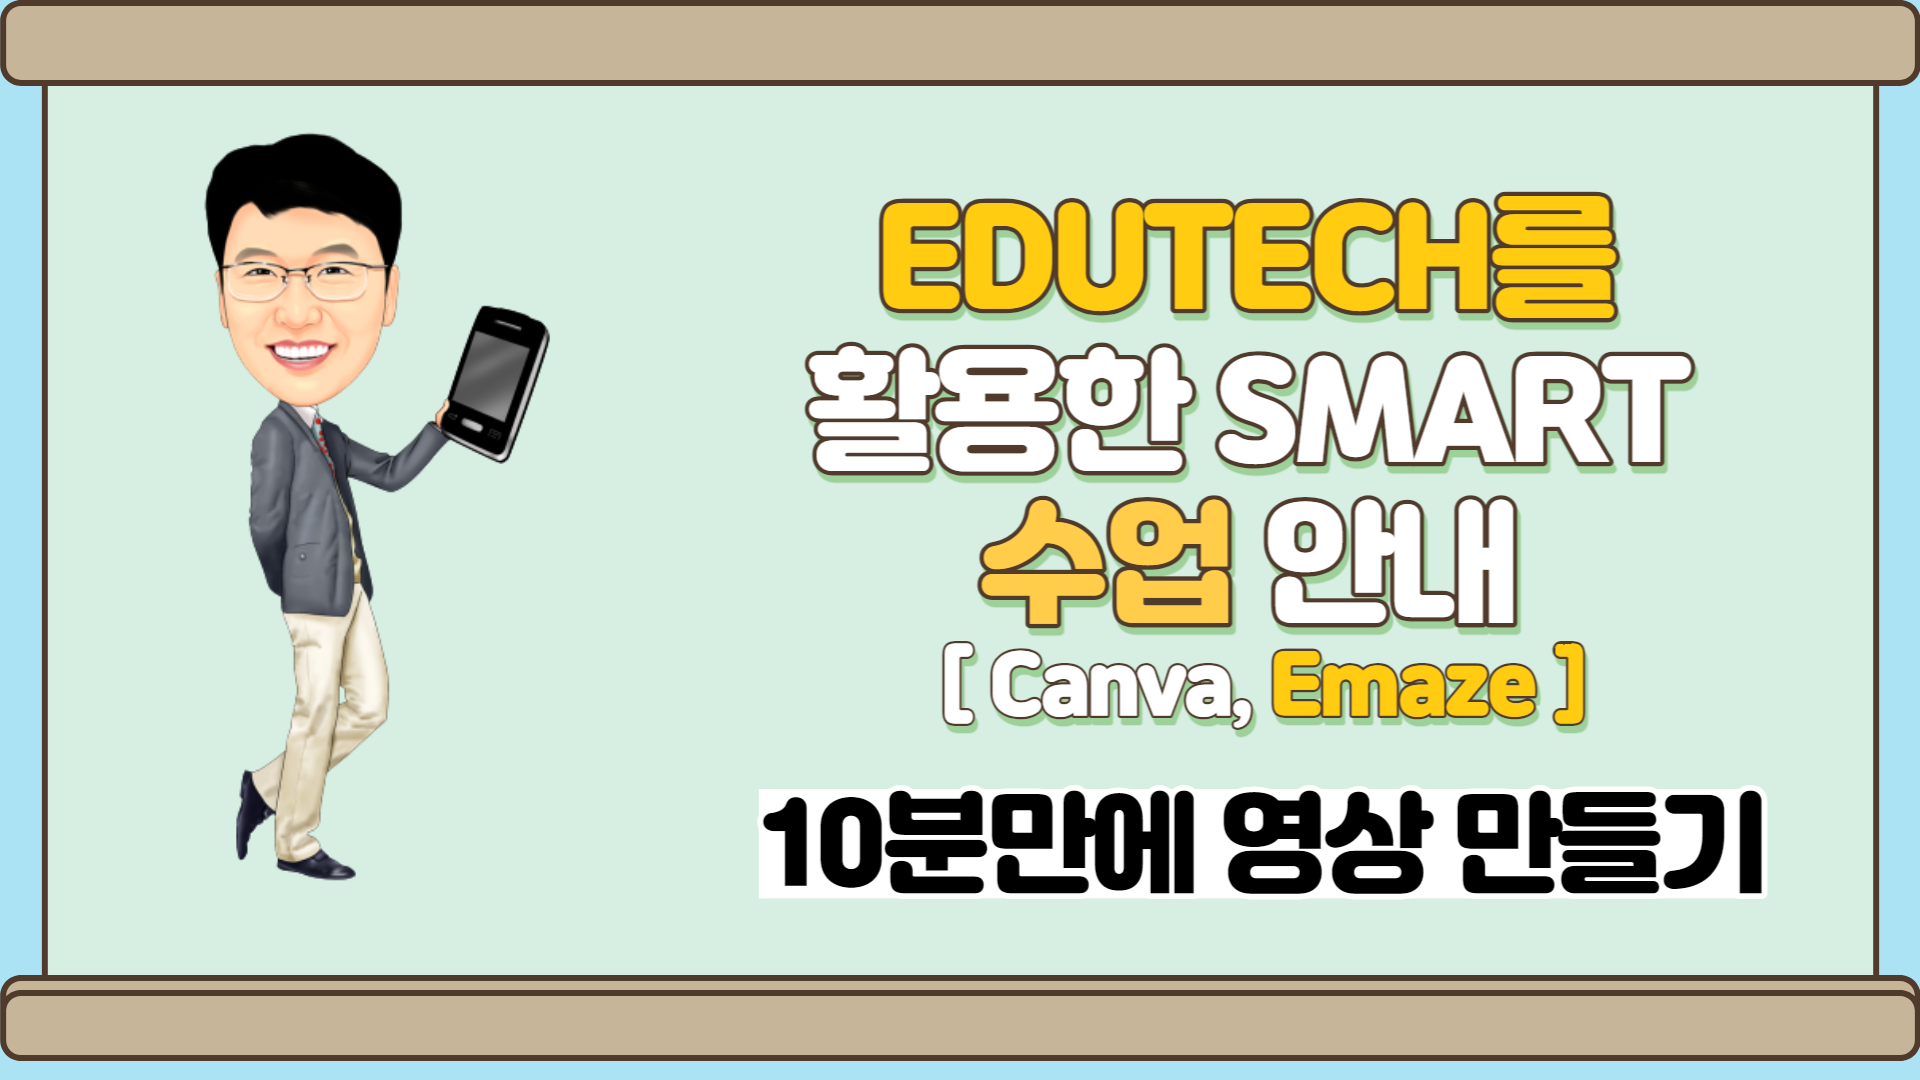 EDUTECH를 활용한 smart 수업 방법 안내 (canva를 활용하여 10분만에 영상콘텐츠만들기) (Canva, EMAZE) 19:00~20:50